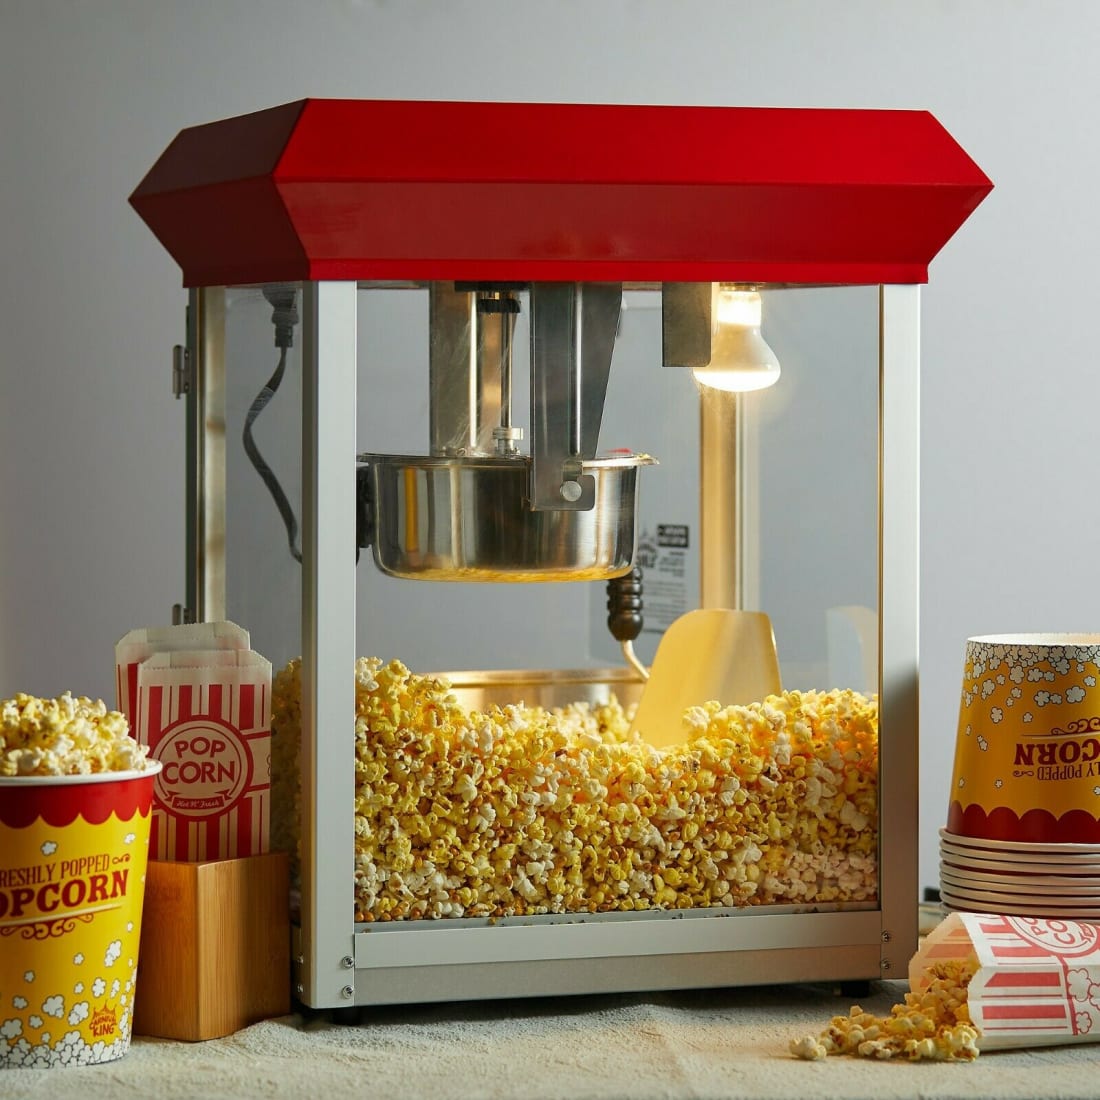 Signature Party Rentals - Popcorn Machine Rentals